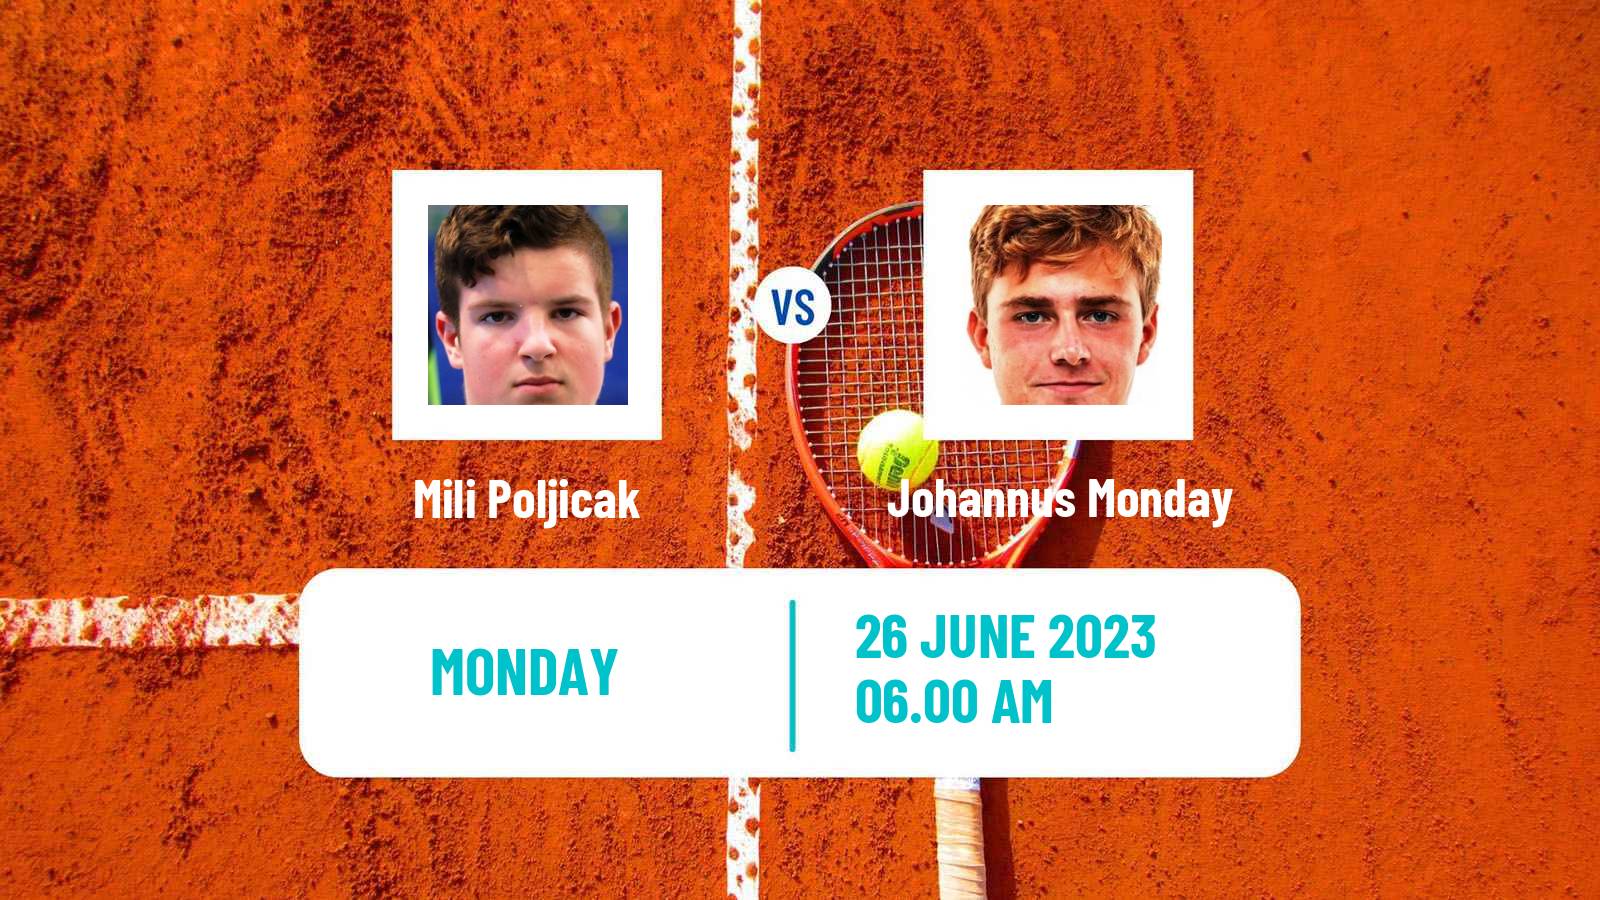 Tennis ATP Wimbledon Mili Poljicak - Johannus Monday